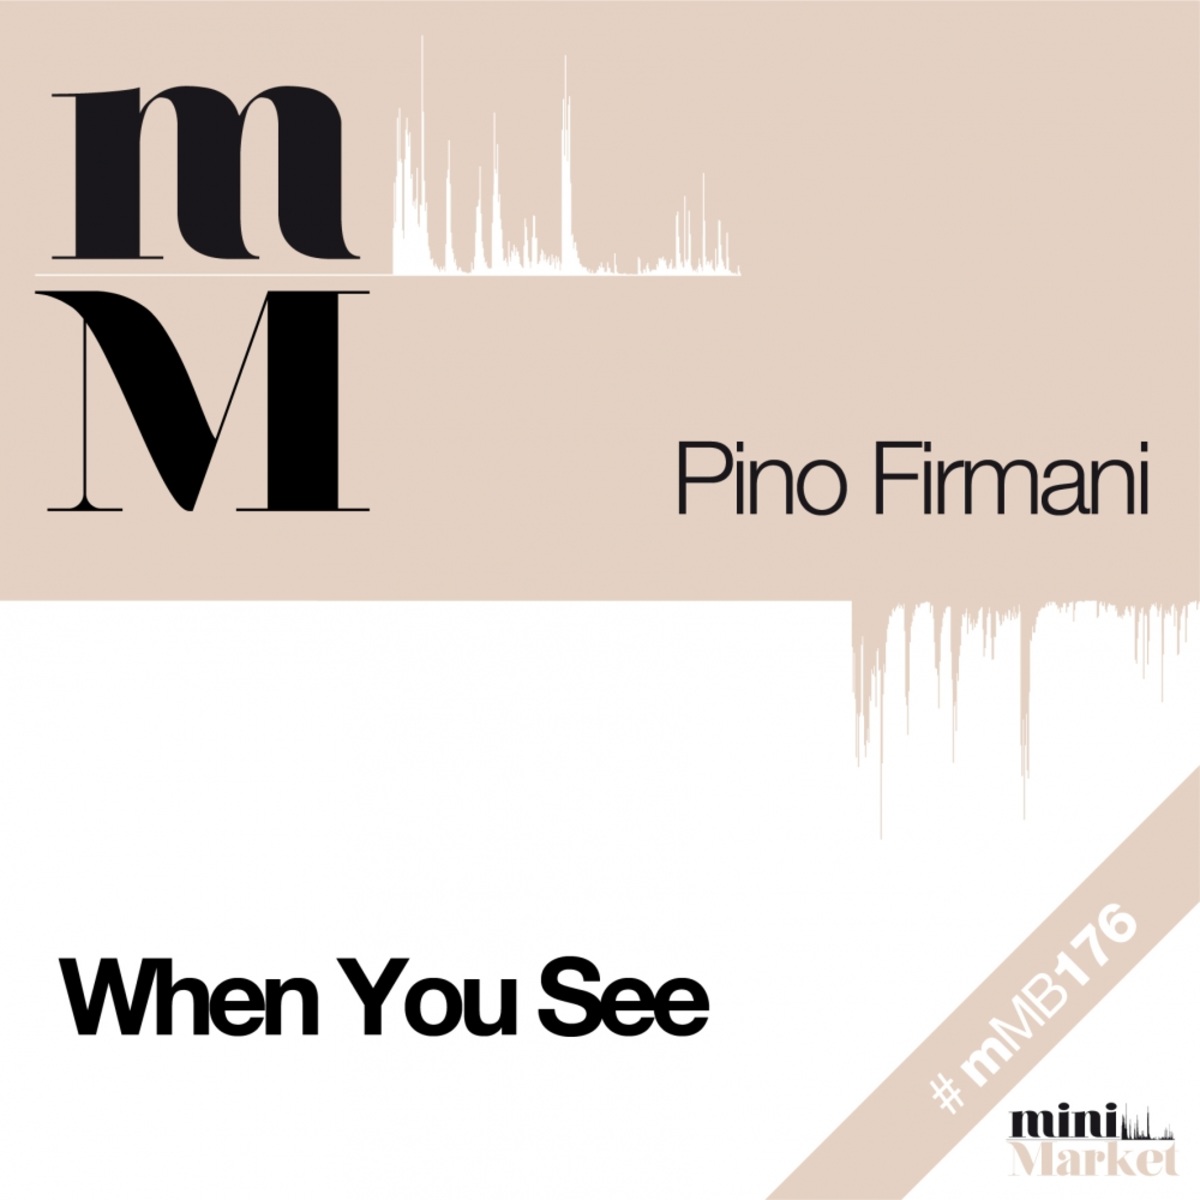 Pino Firmani - When You See / miniMarket